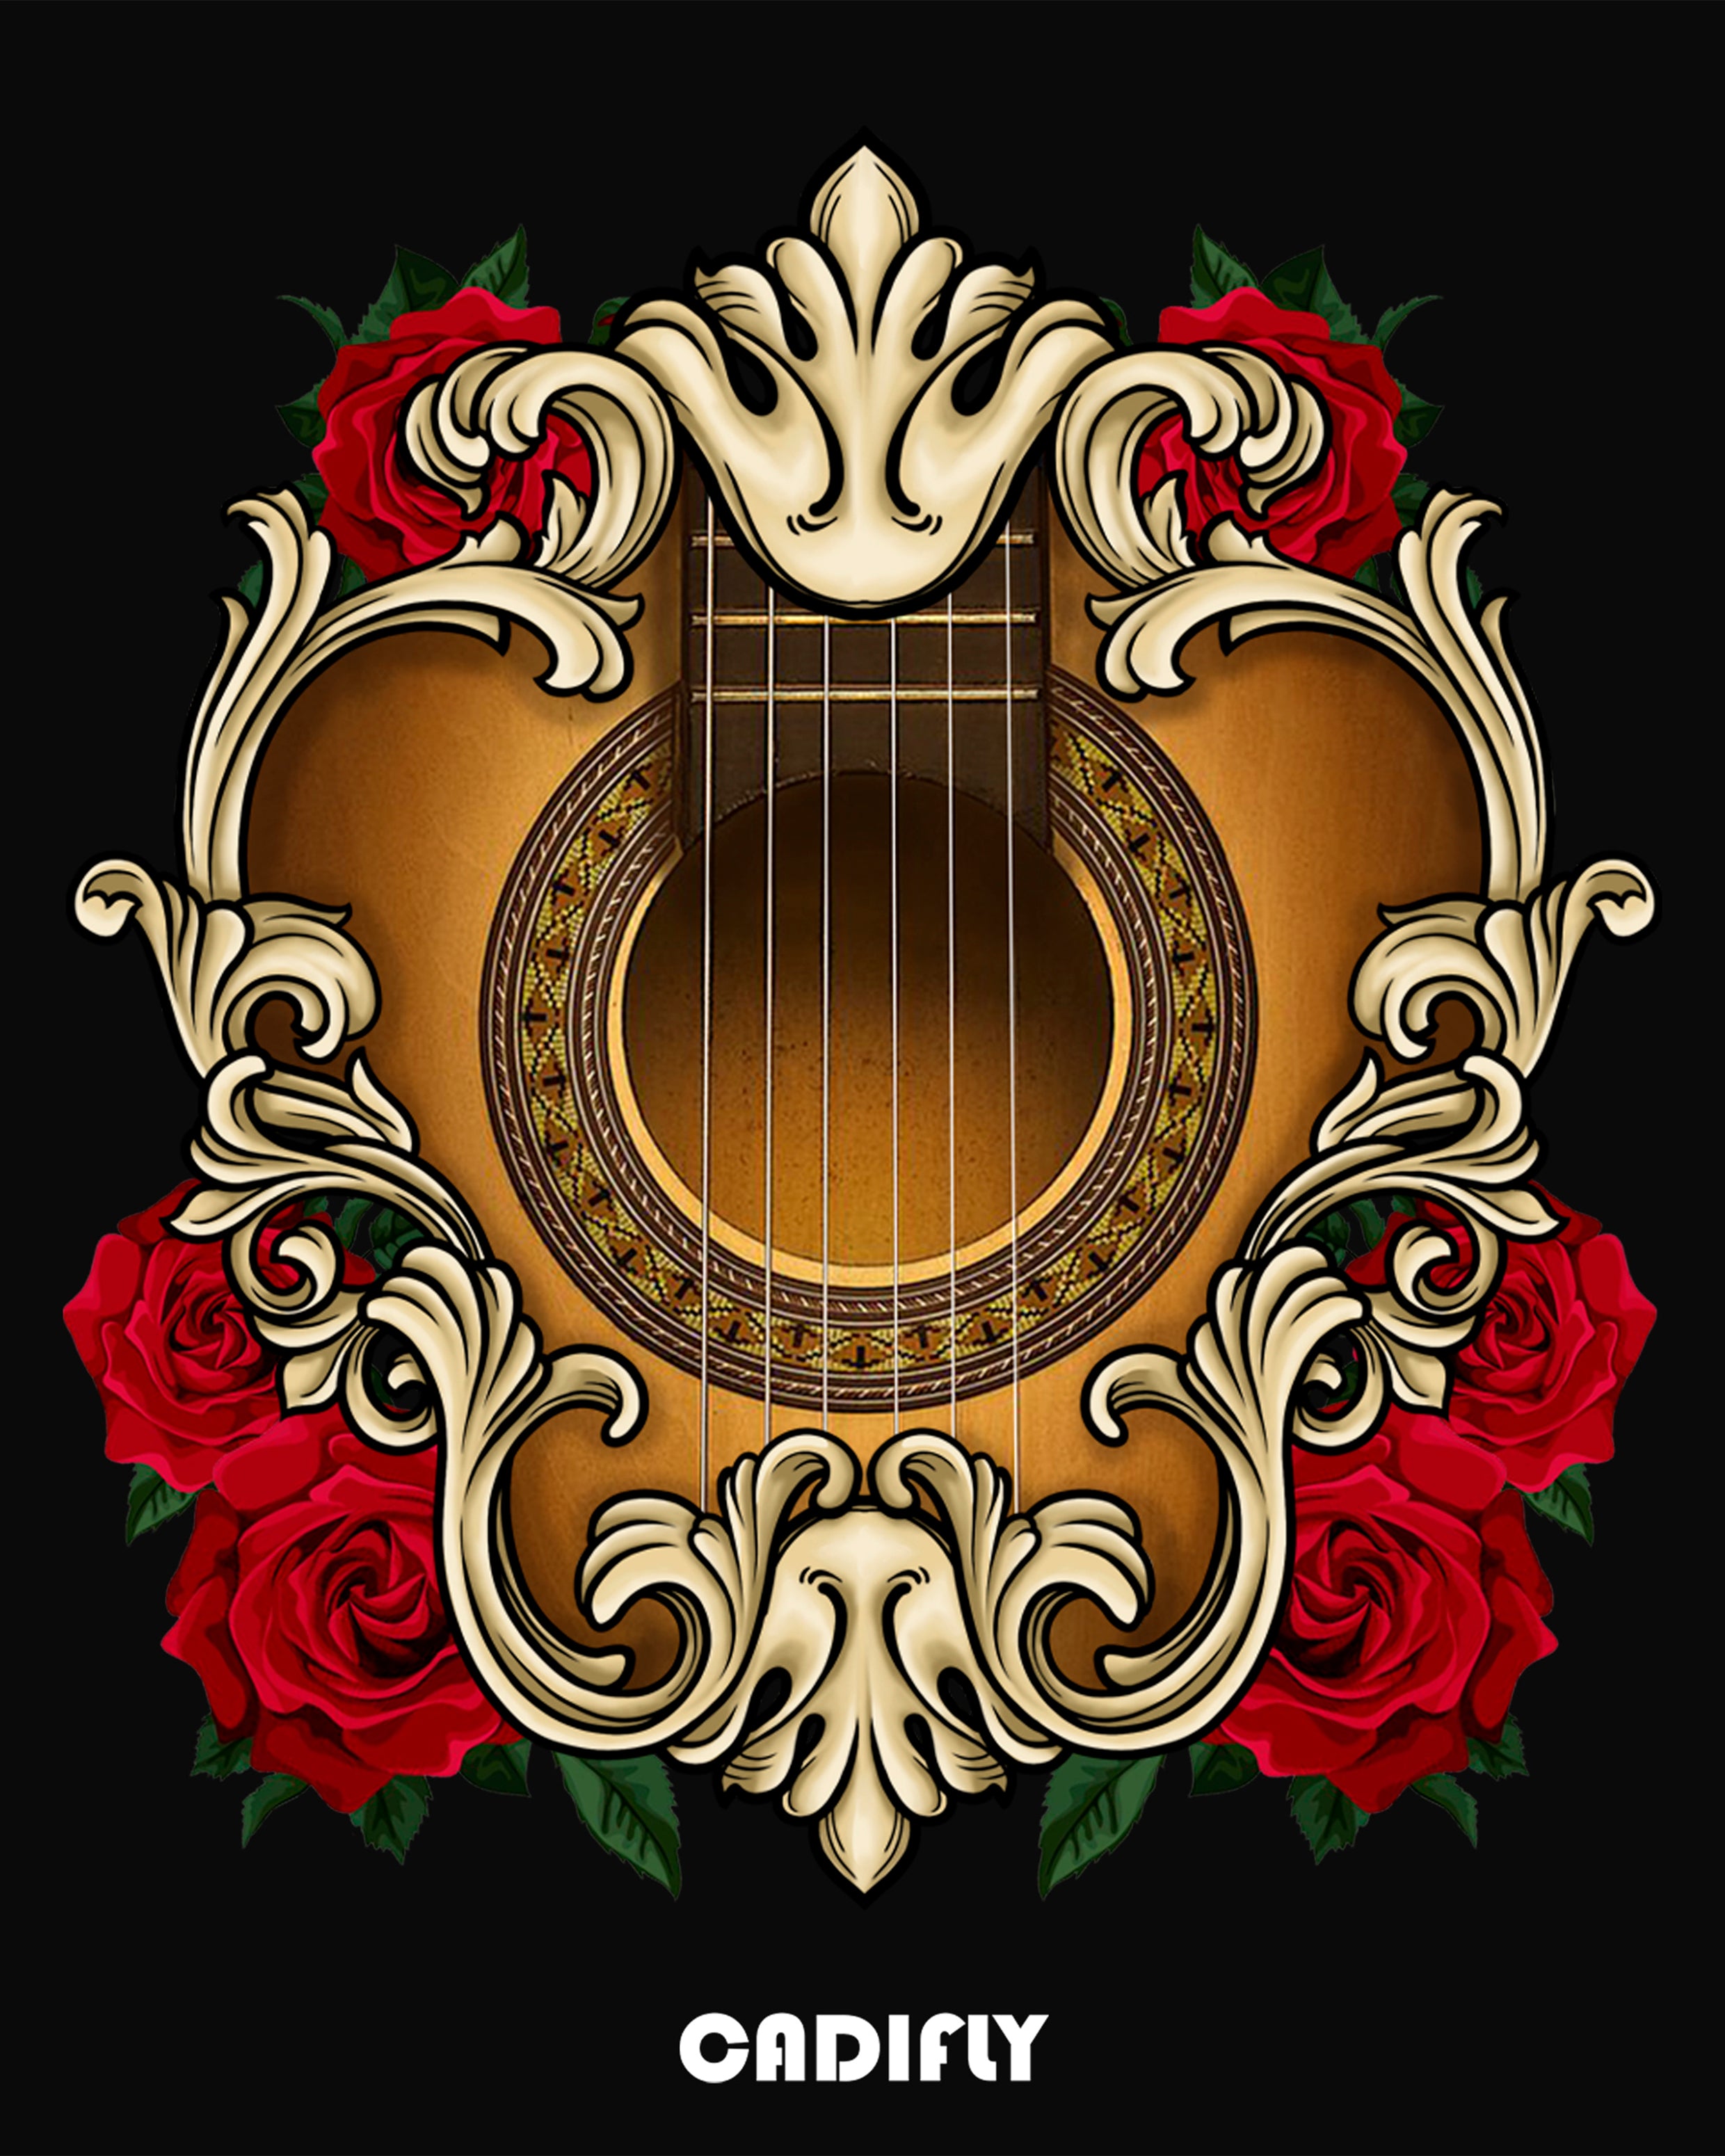 Diseño de guitarra flamenca rodeada de rosas